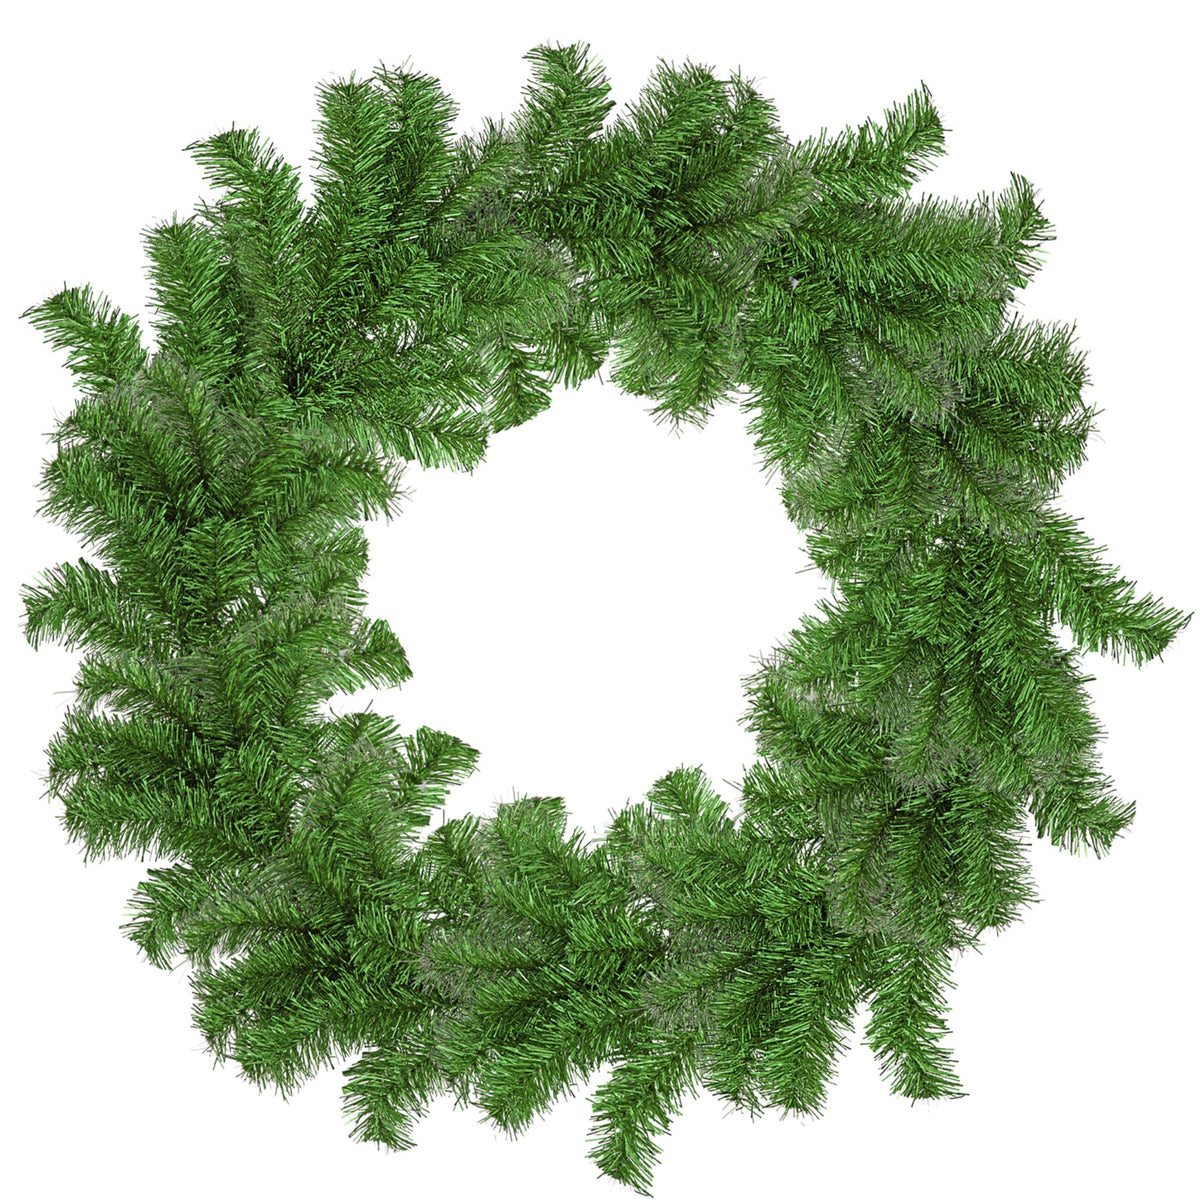 Evergreen Classic Christmas Wreaths